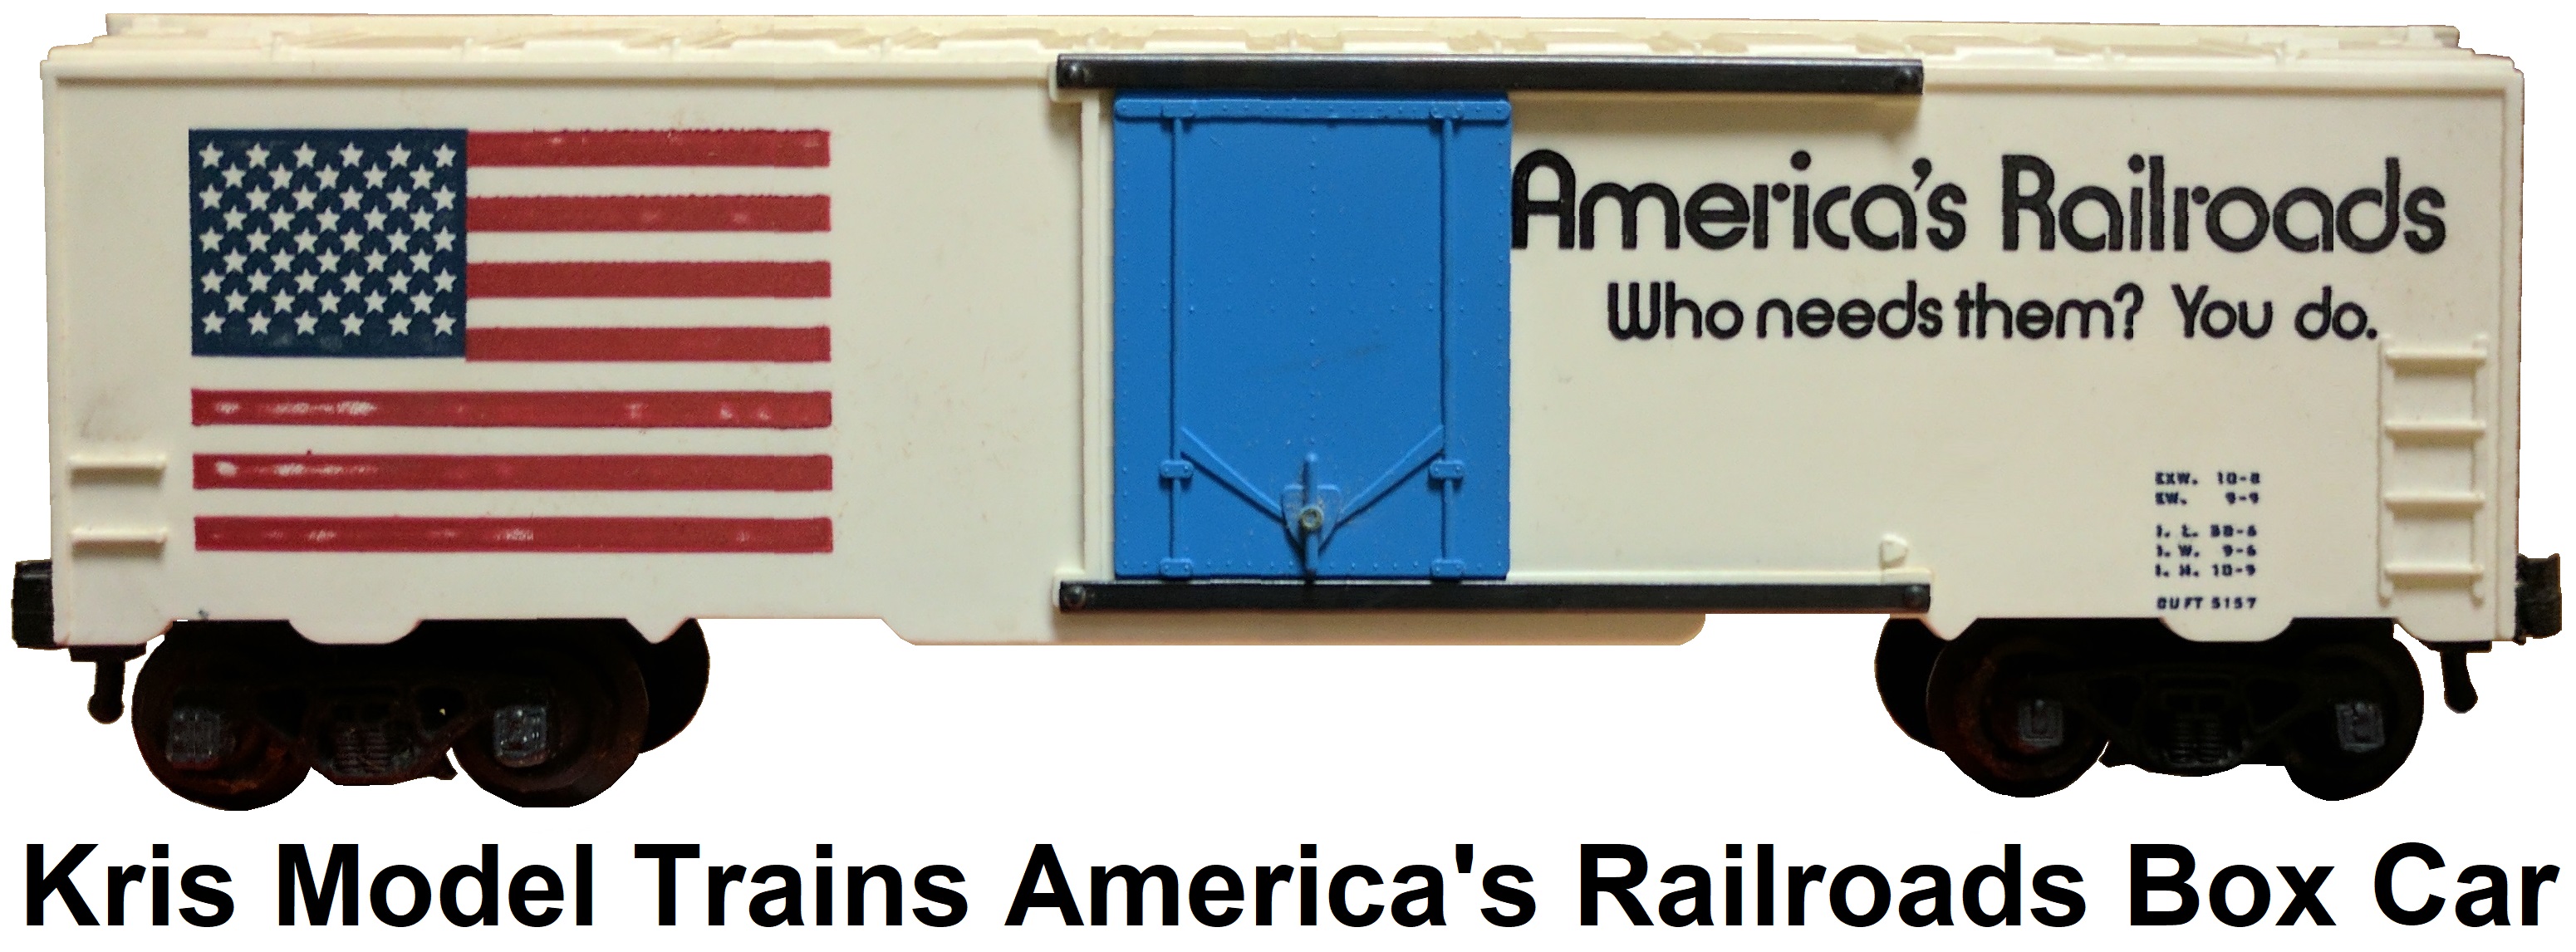 Kris Model Trains America's Railroads box car